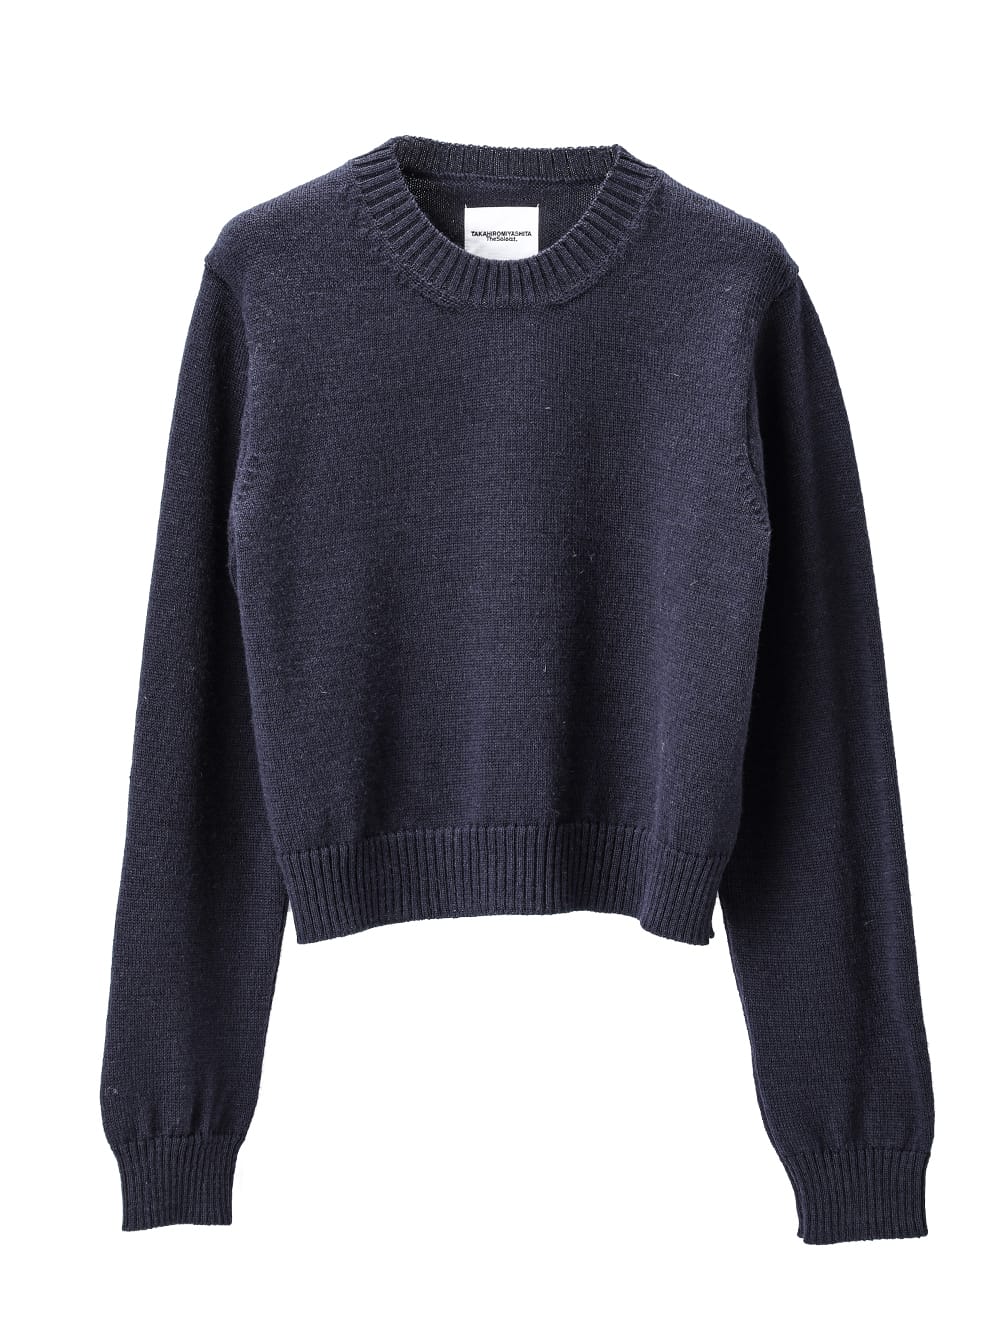 shetland wool cropped crewneck sweater.